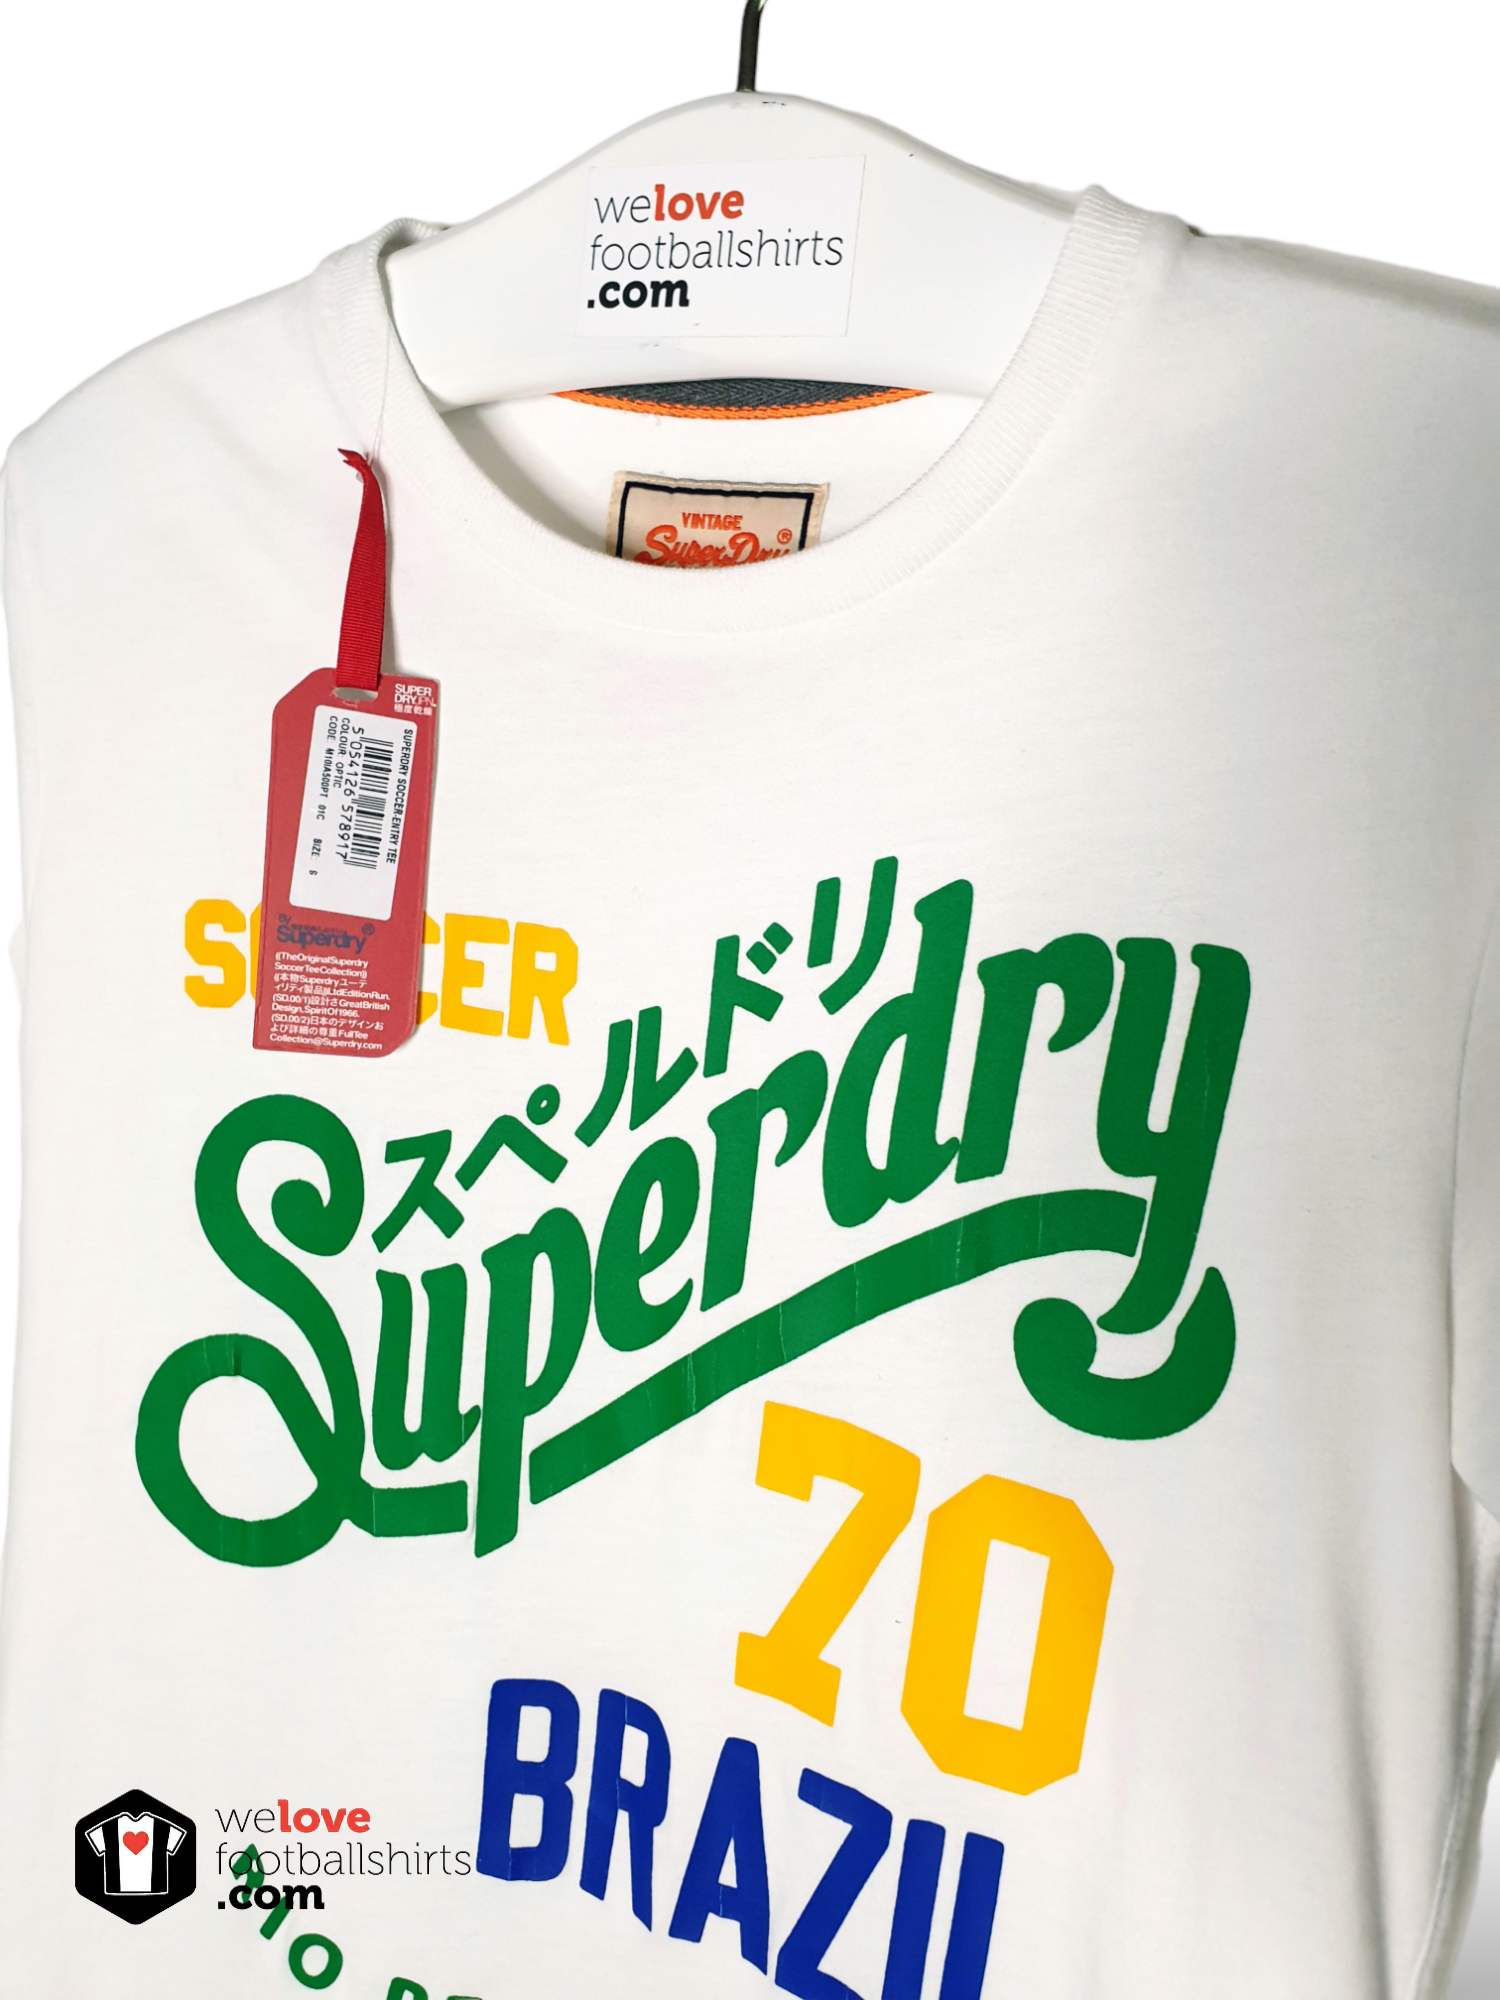 Fanwear cotton football vintage t-shirt Superdry Brasil 70